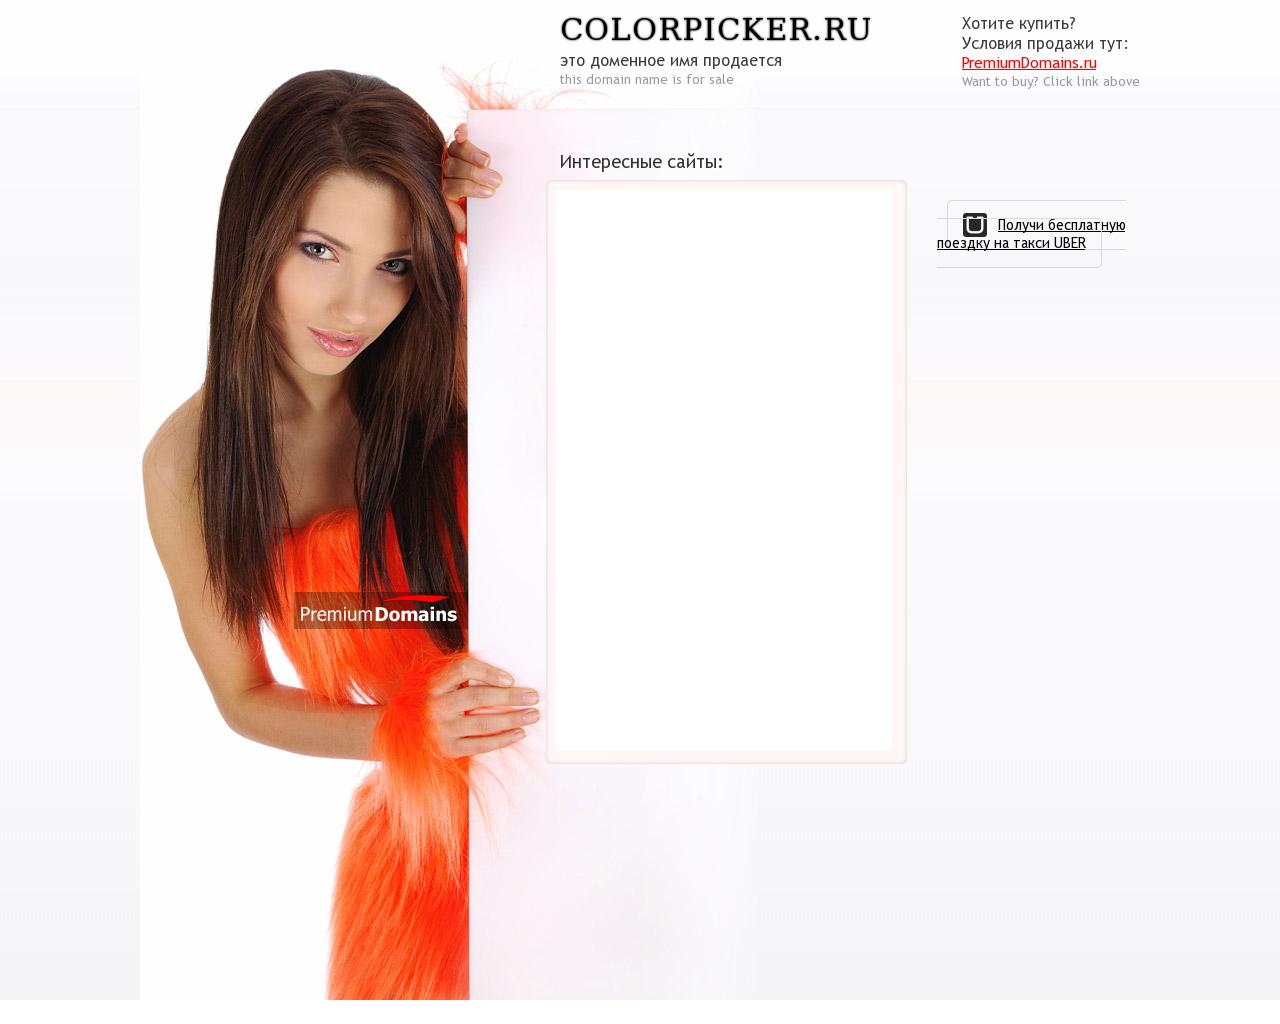 Изображение сайта colorpicker.ru в разрешении 1280x1024